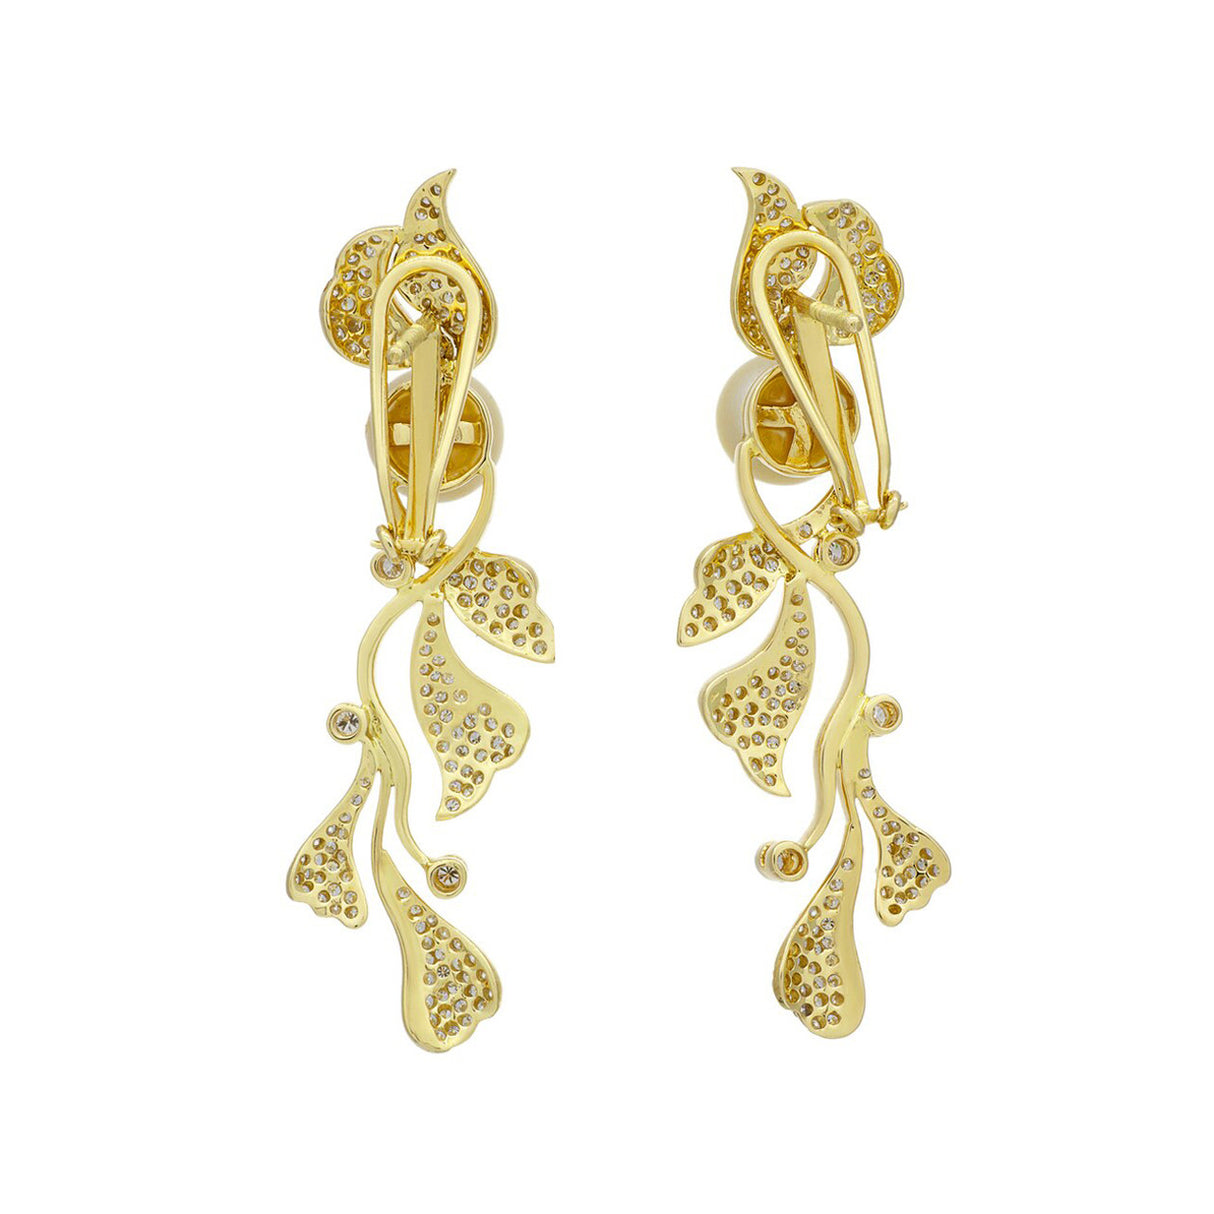 18K Gold Diamond South Sea Pearl Earrings